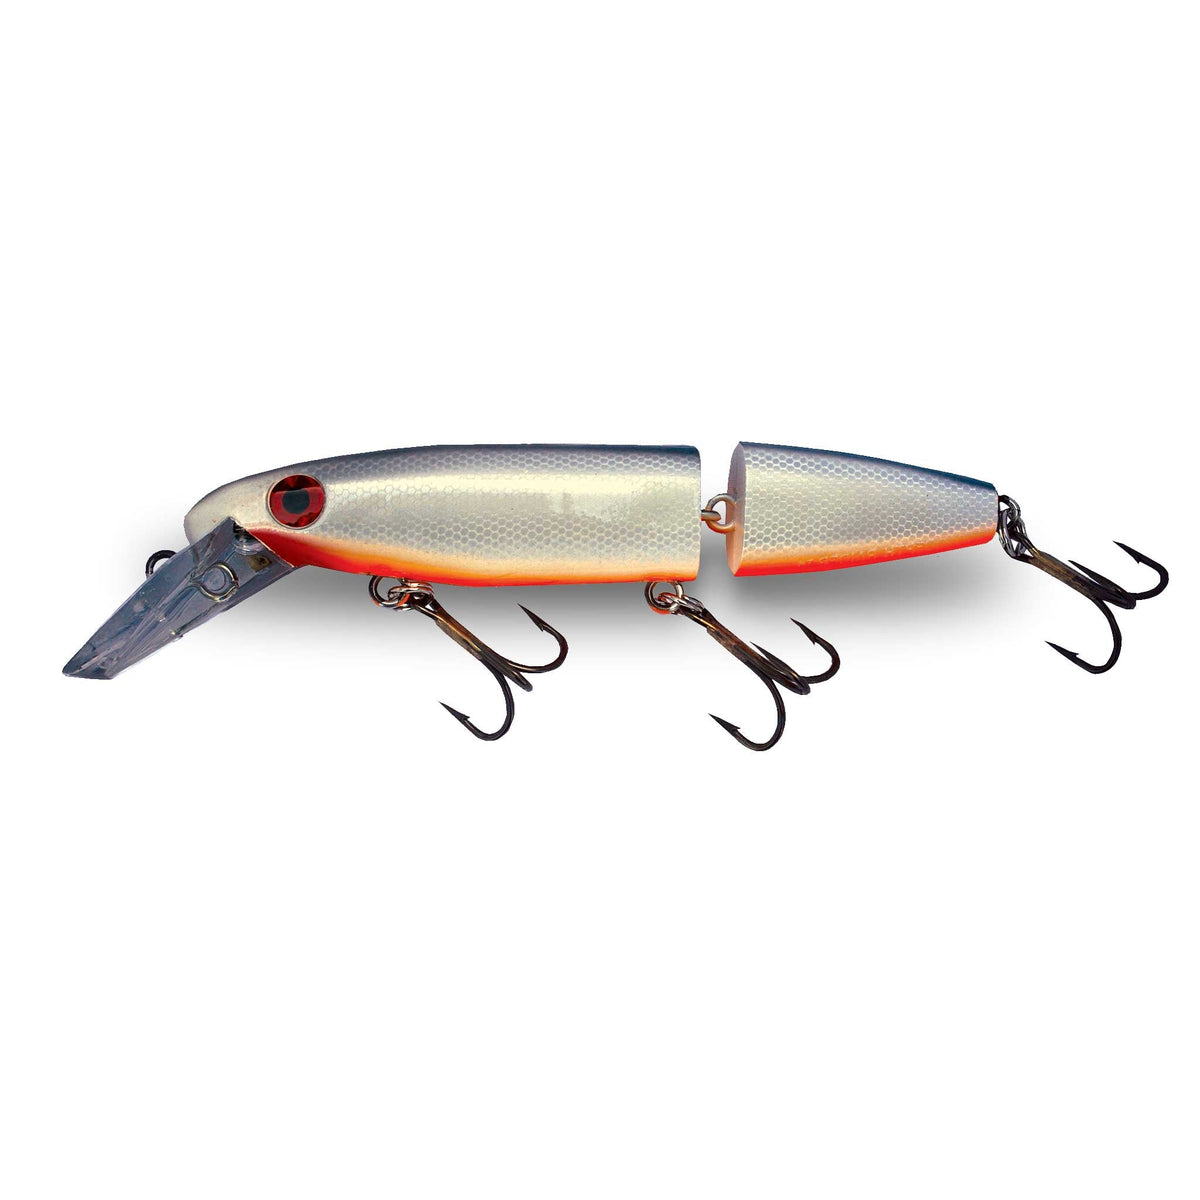  Rapala Jointed 07 Fishing lure (Firetiger, Size- 2.75